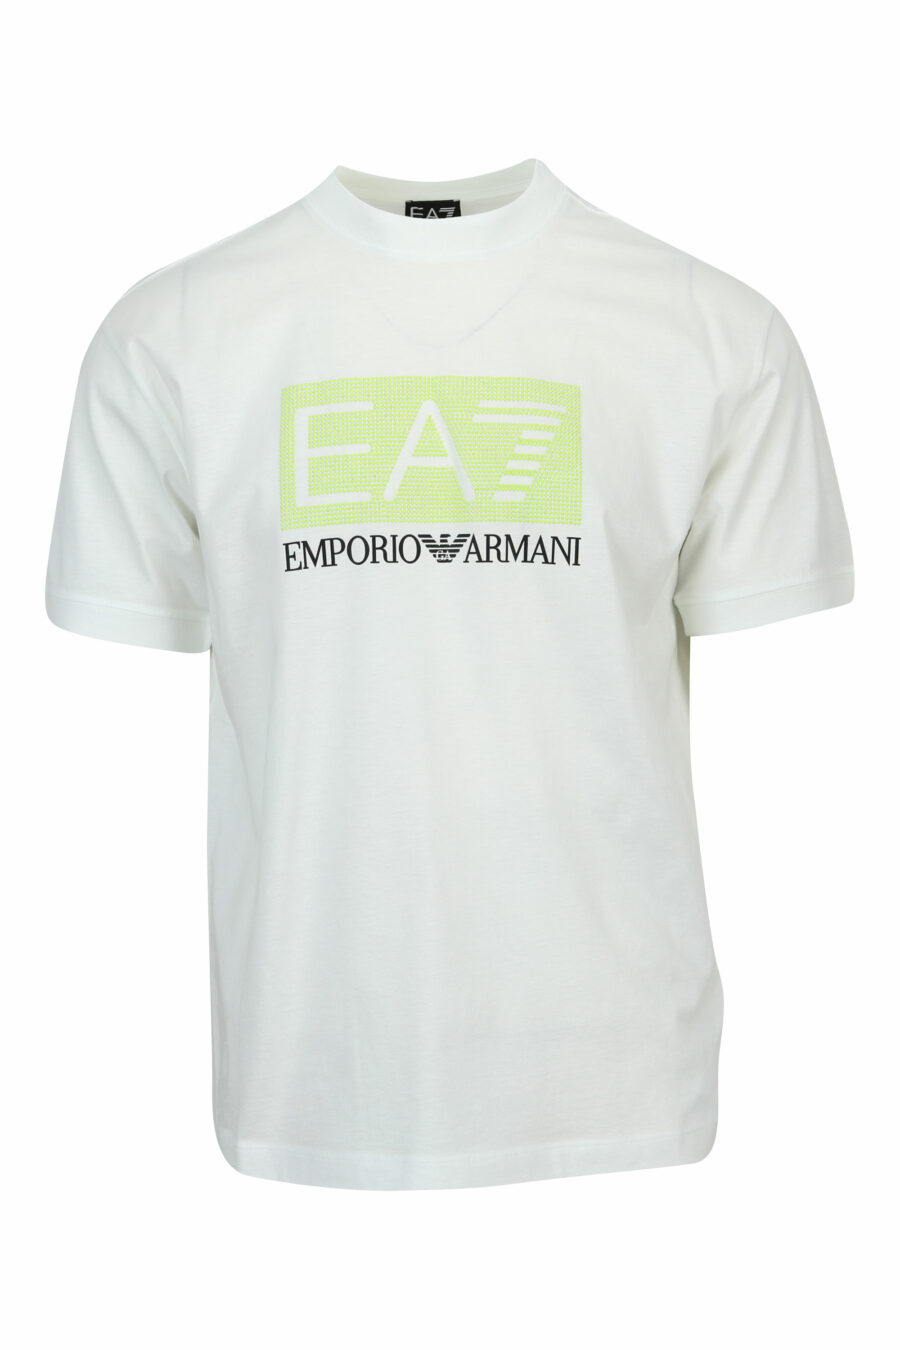 Camiseta blanca con maxilogo "lux identity" en recuadro verde - 8057970672555